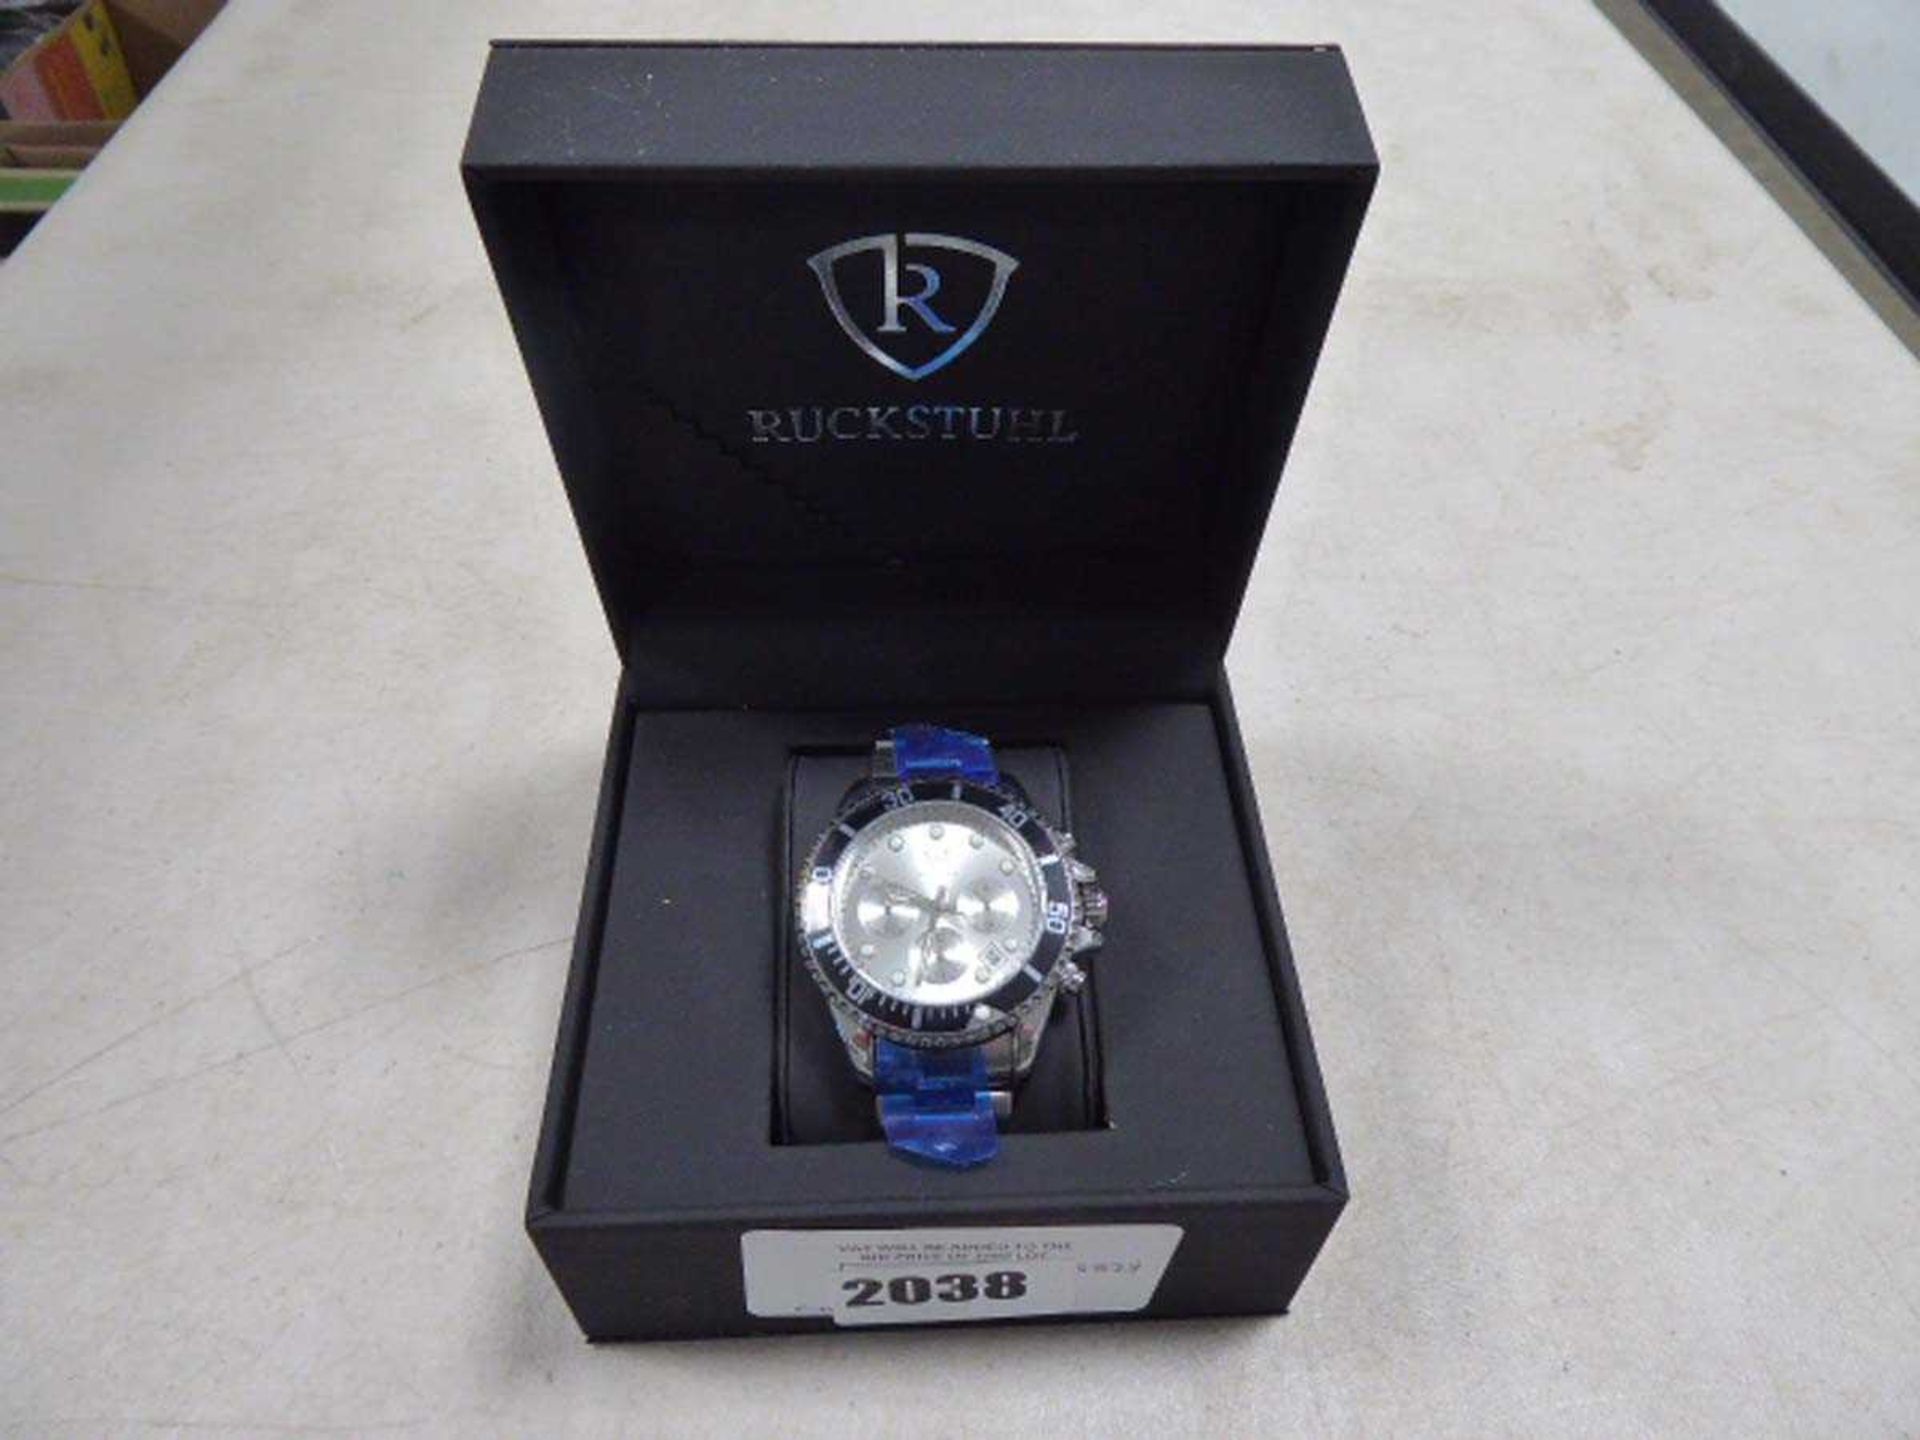 +VAT Ruckstuhl chronograph stainless steel strap wrist watch model 3829 with box